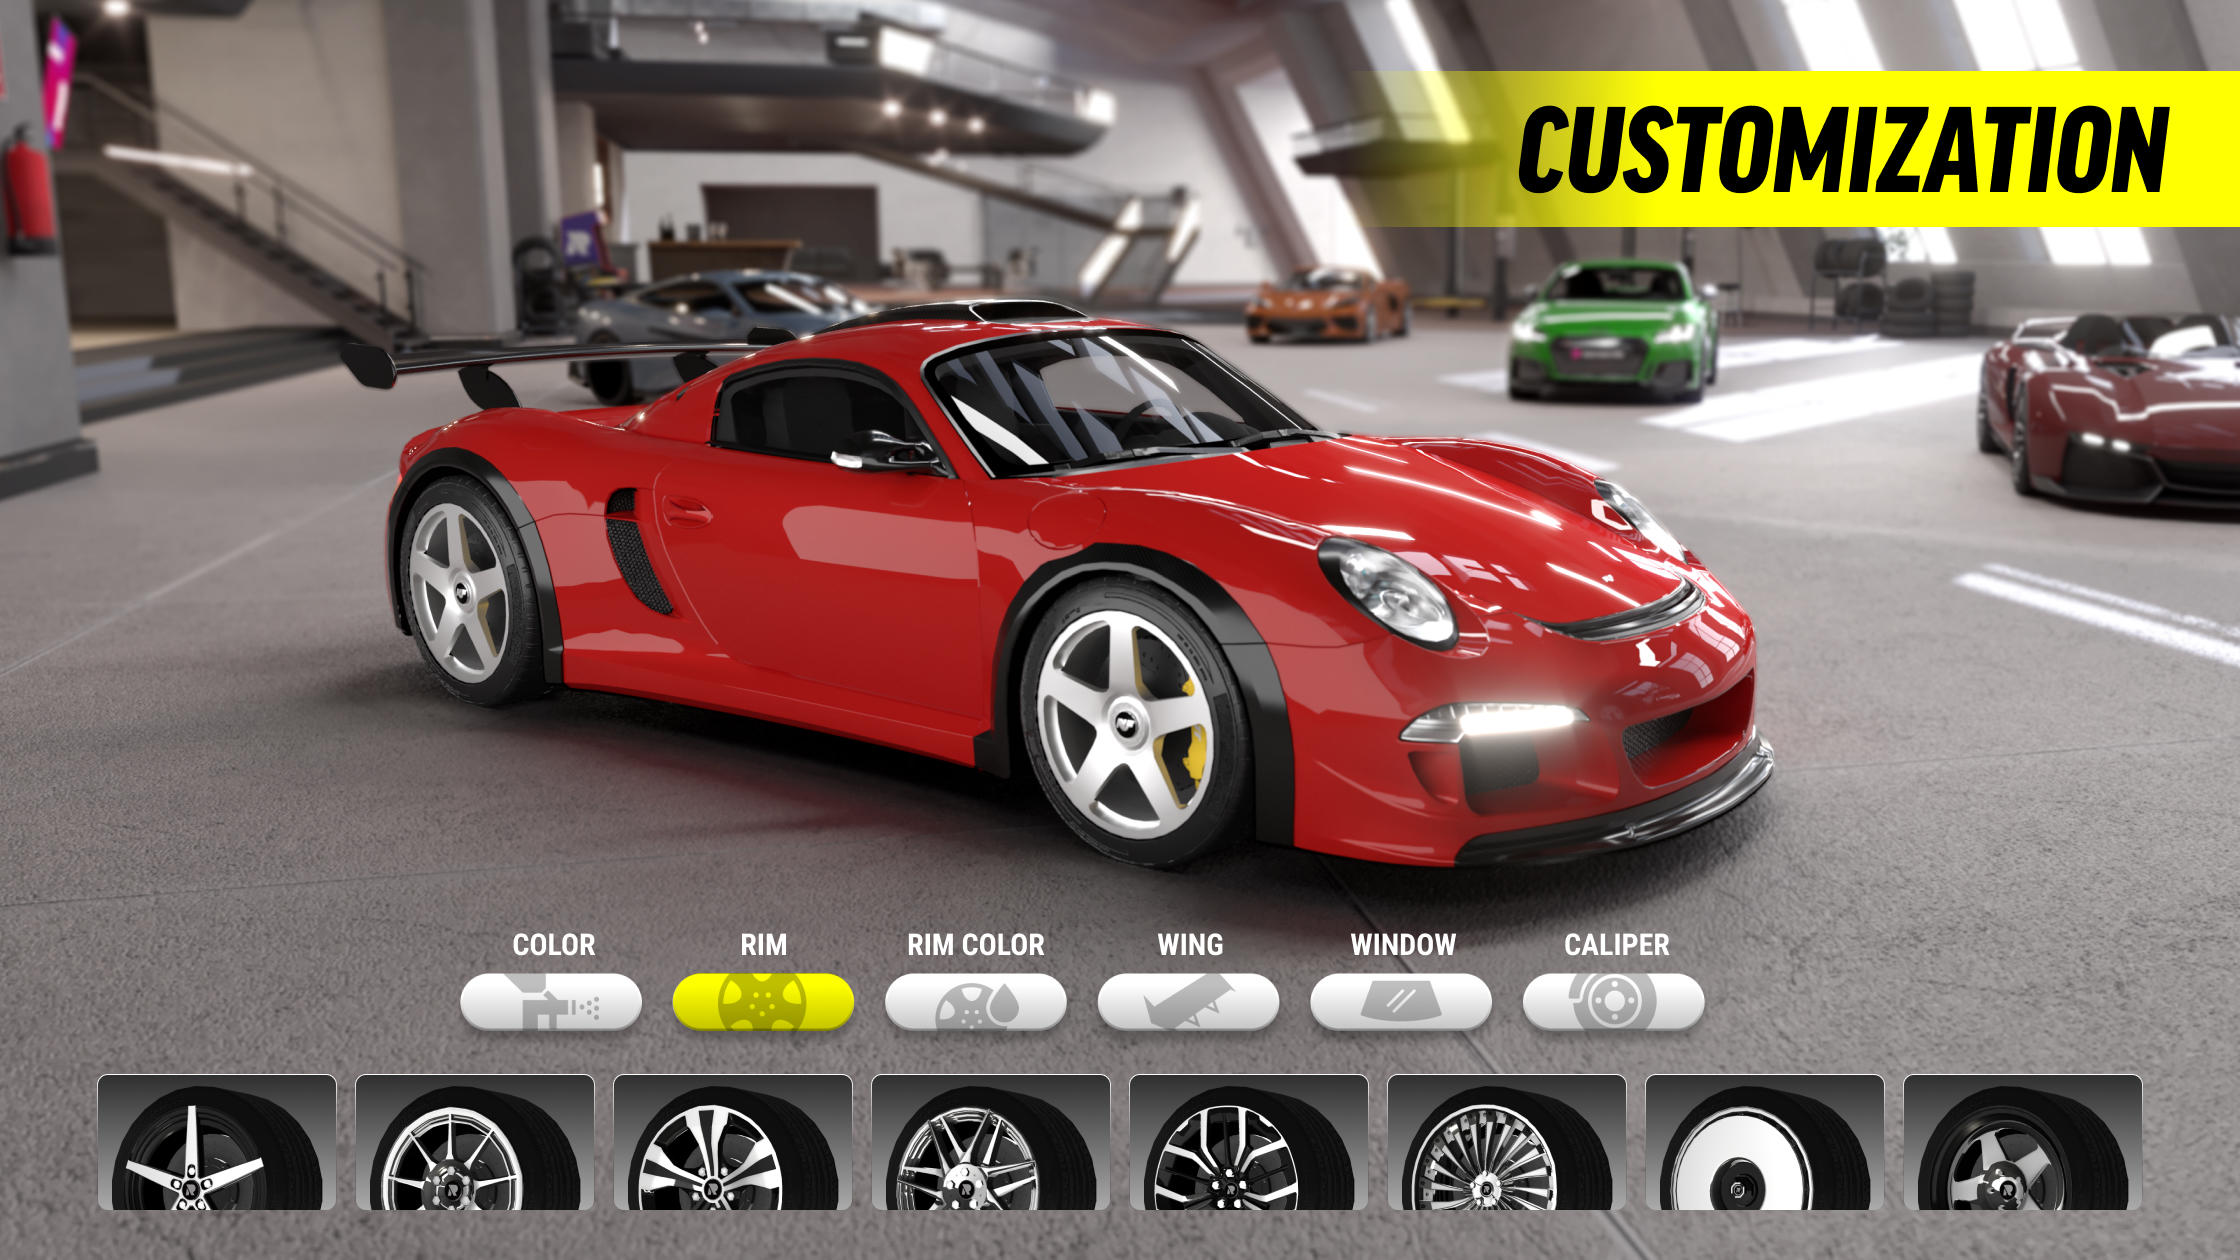 Screenshot of Race Max Pro - Car Racing